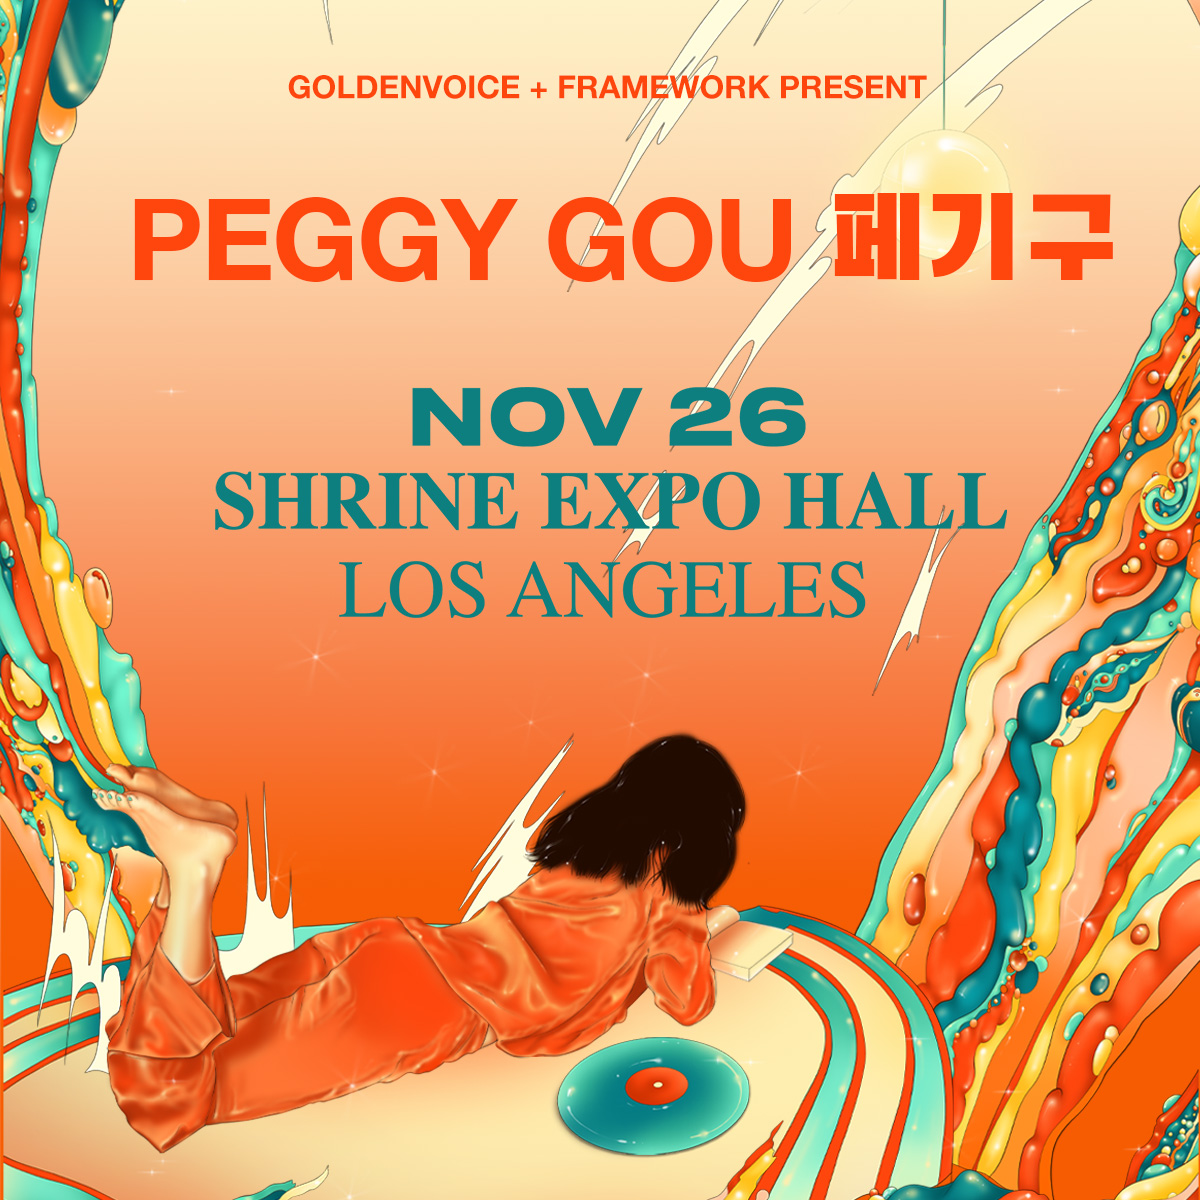 Peggy Gou NYE: Gou Years Eve - December 31st, 2021 - 1015 Folsom (San  Francisco) Tickets